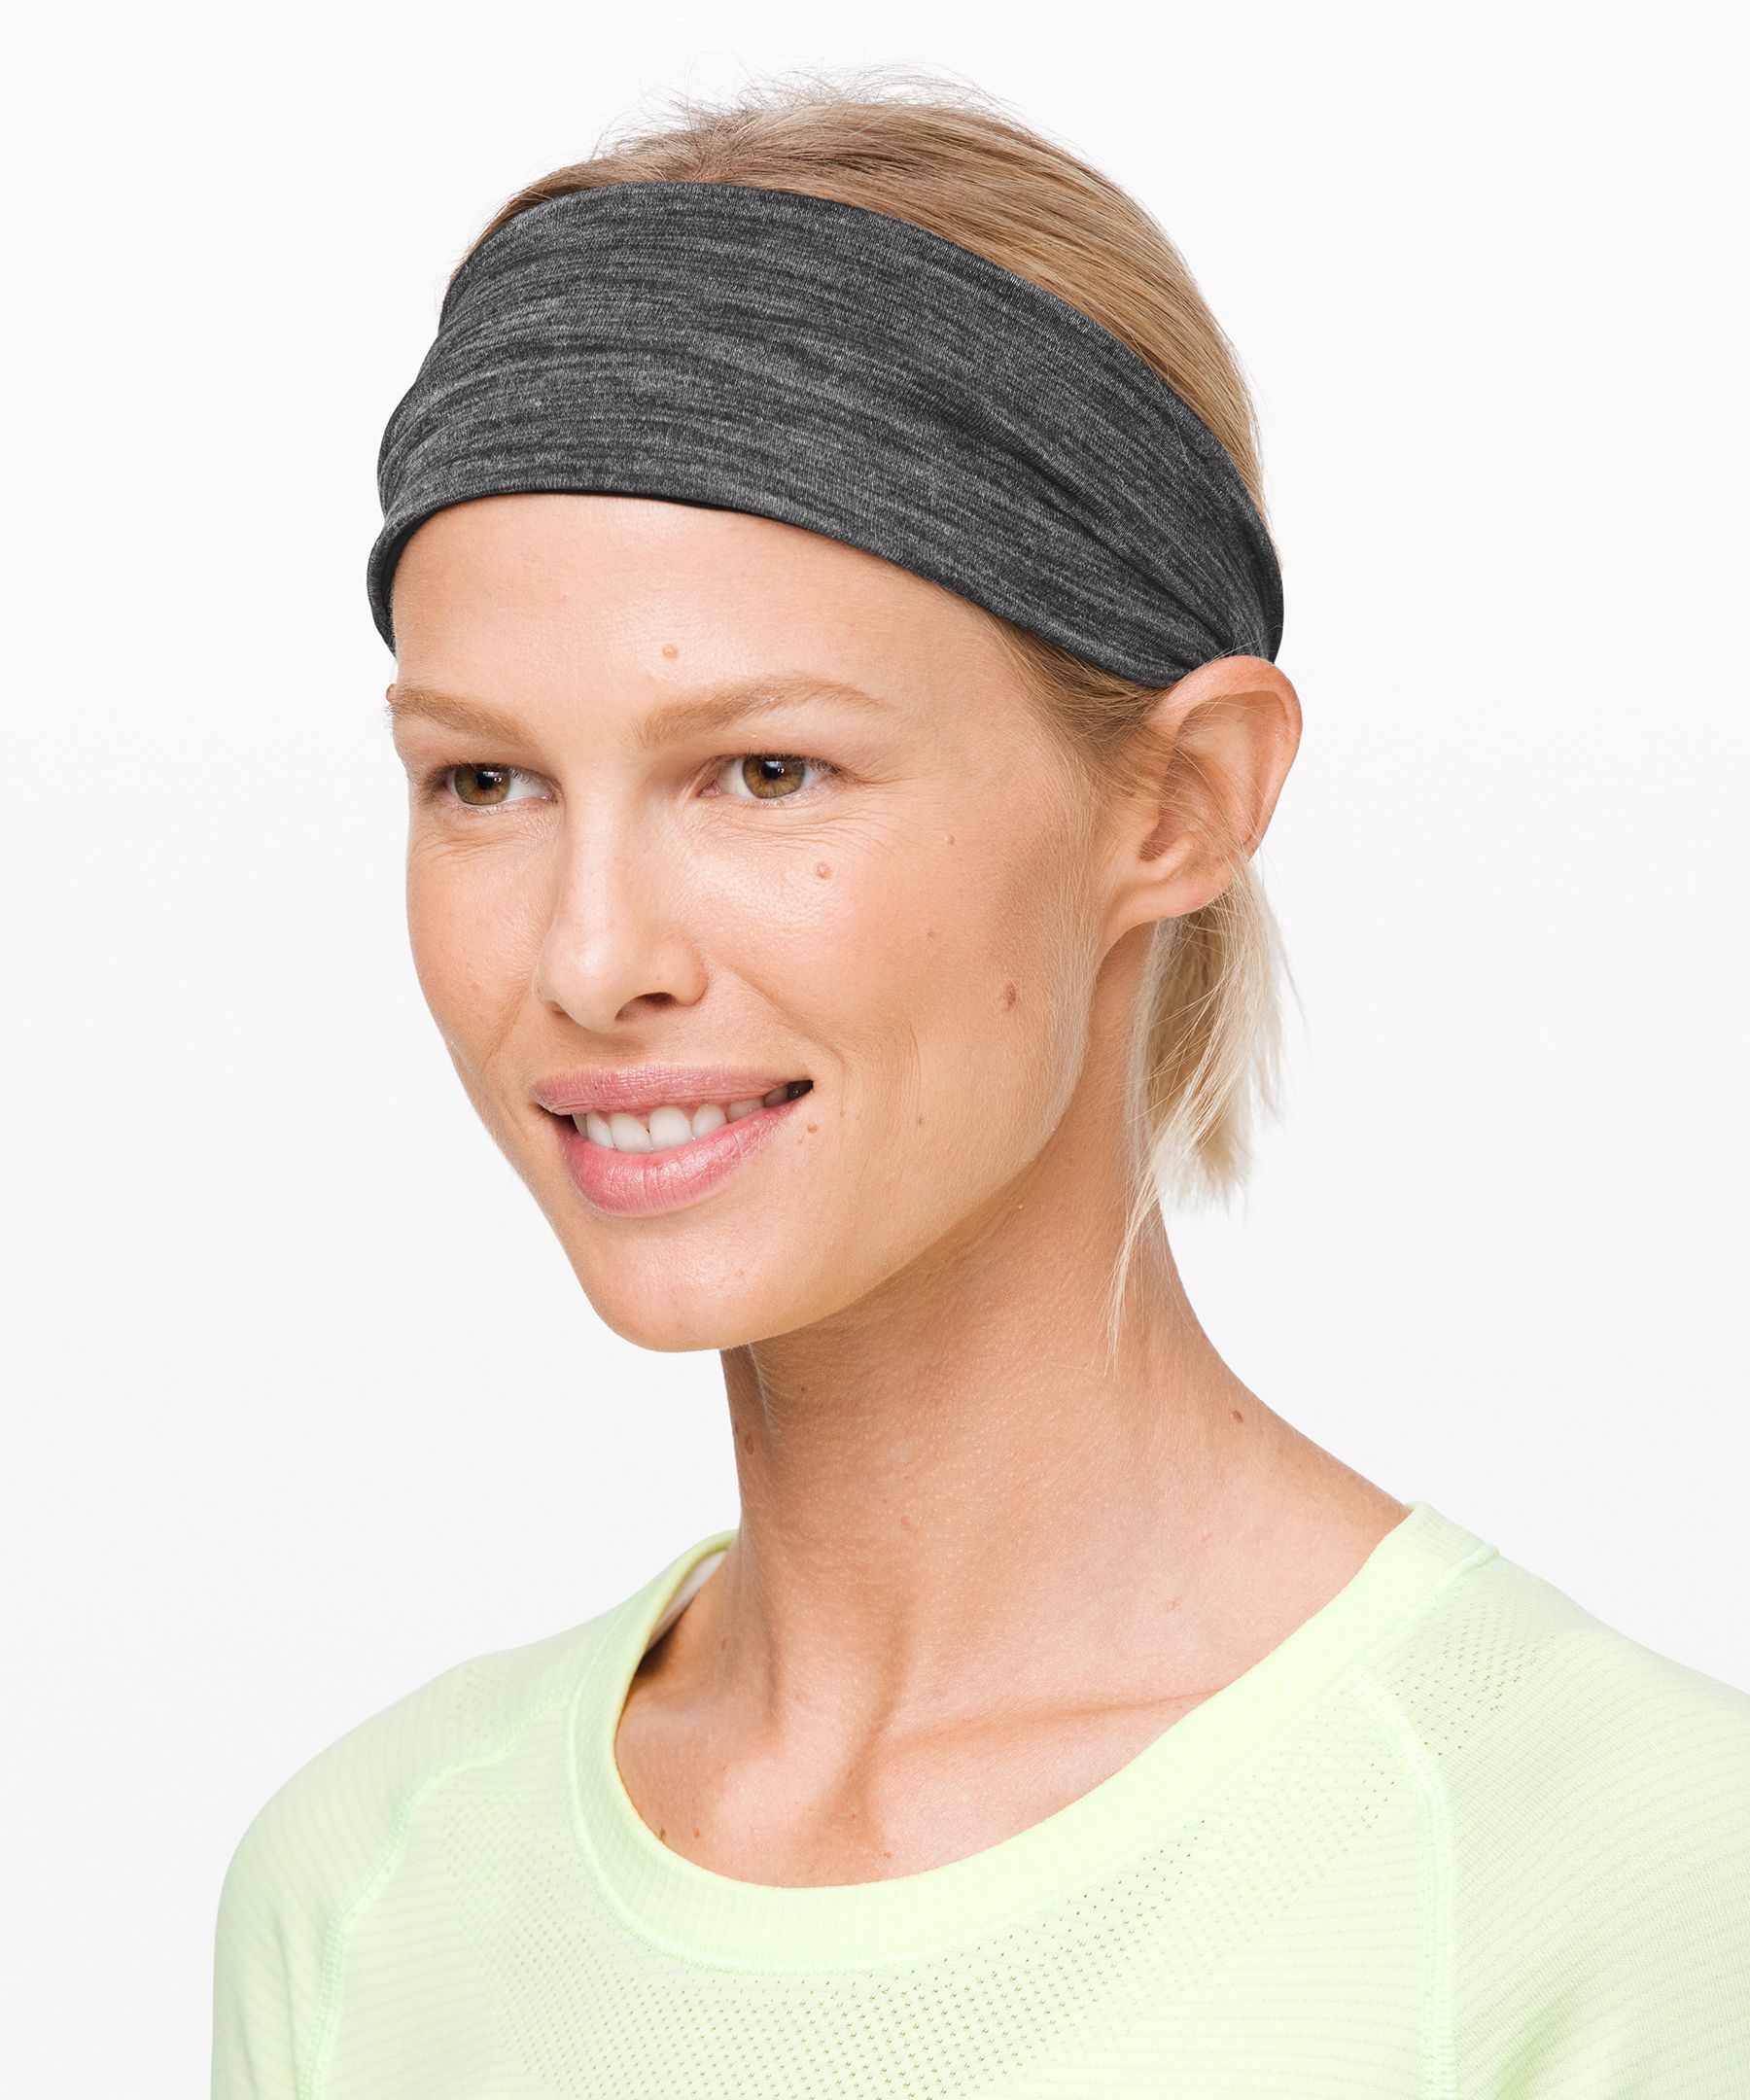 lululemon athletica Nulu Wide Reversible Headband - Color White in